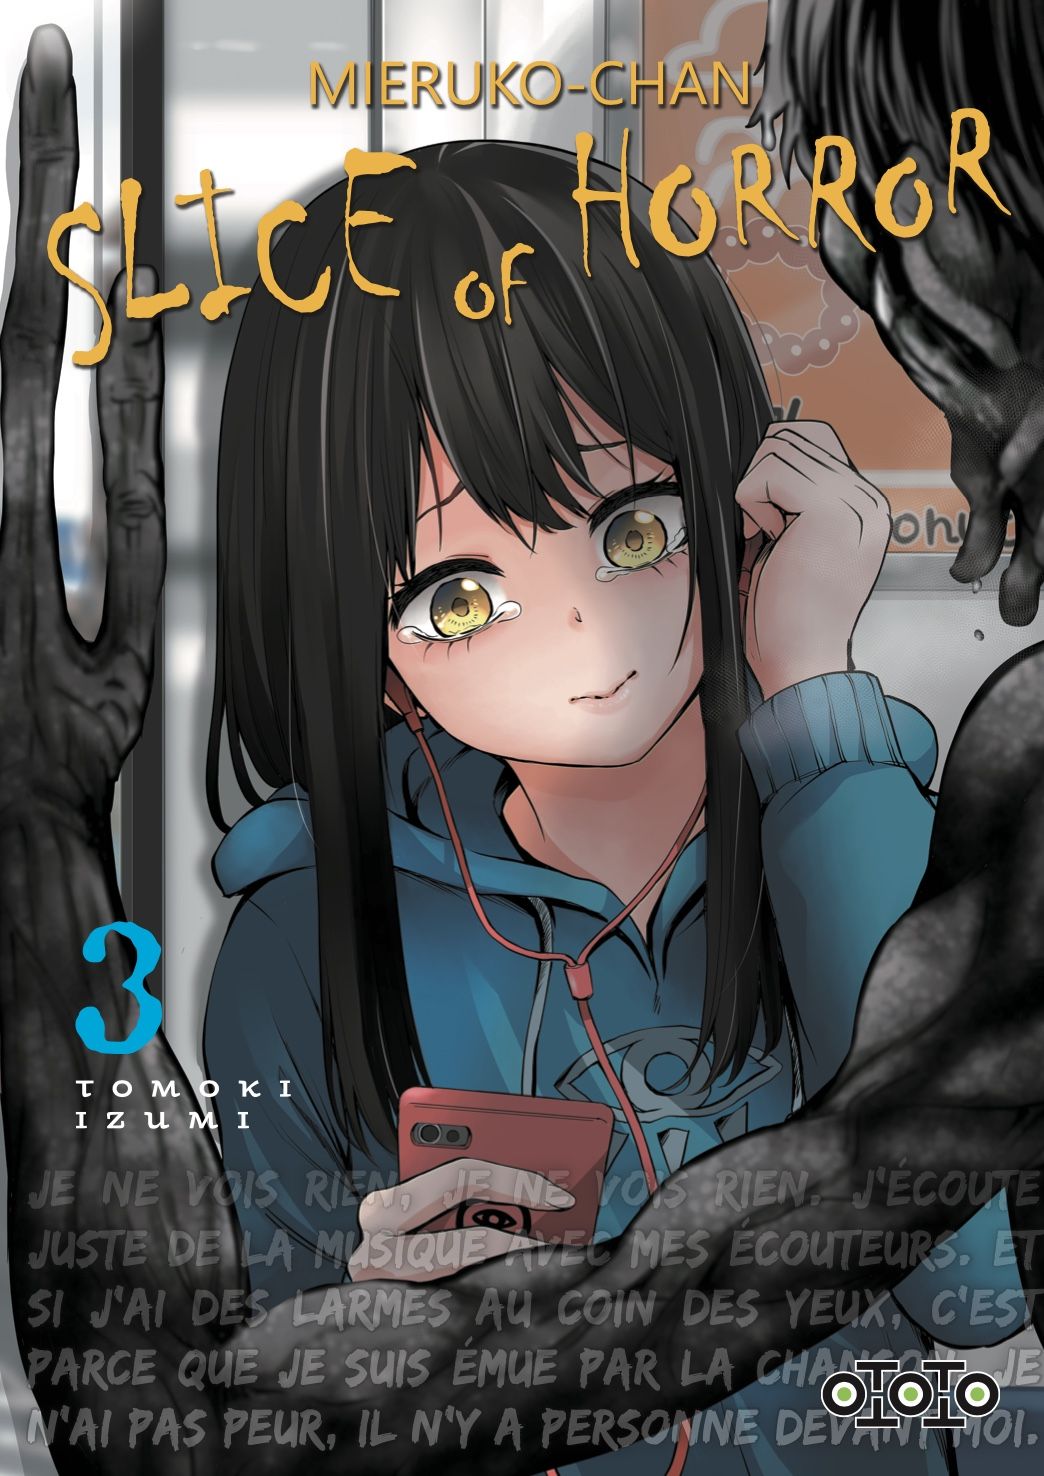 Mieruko-chan Slice of Horror – Tome 3